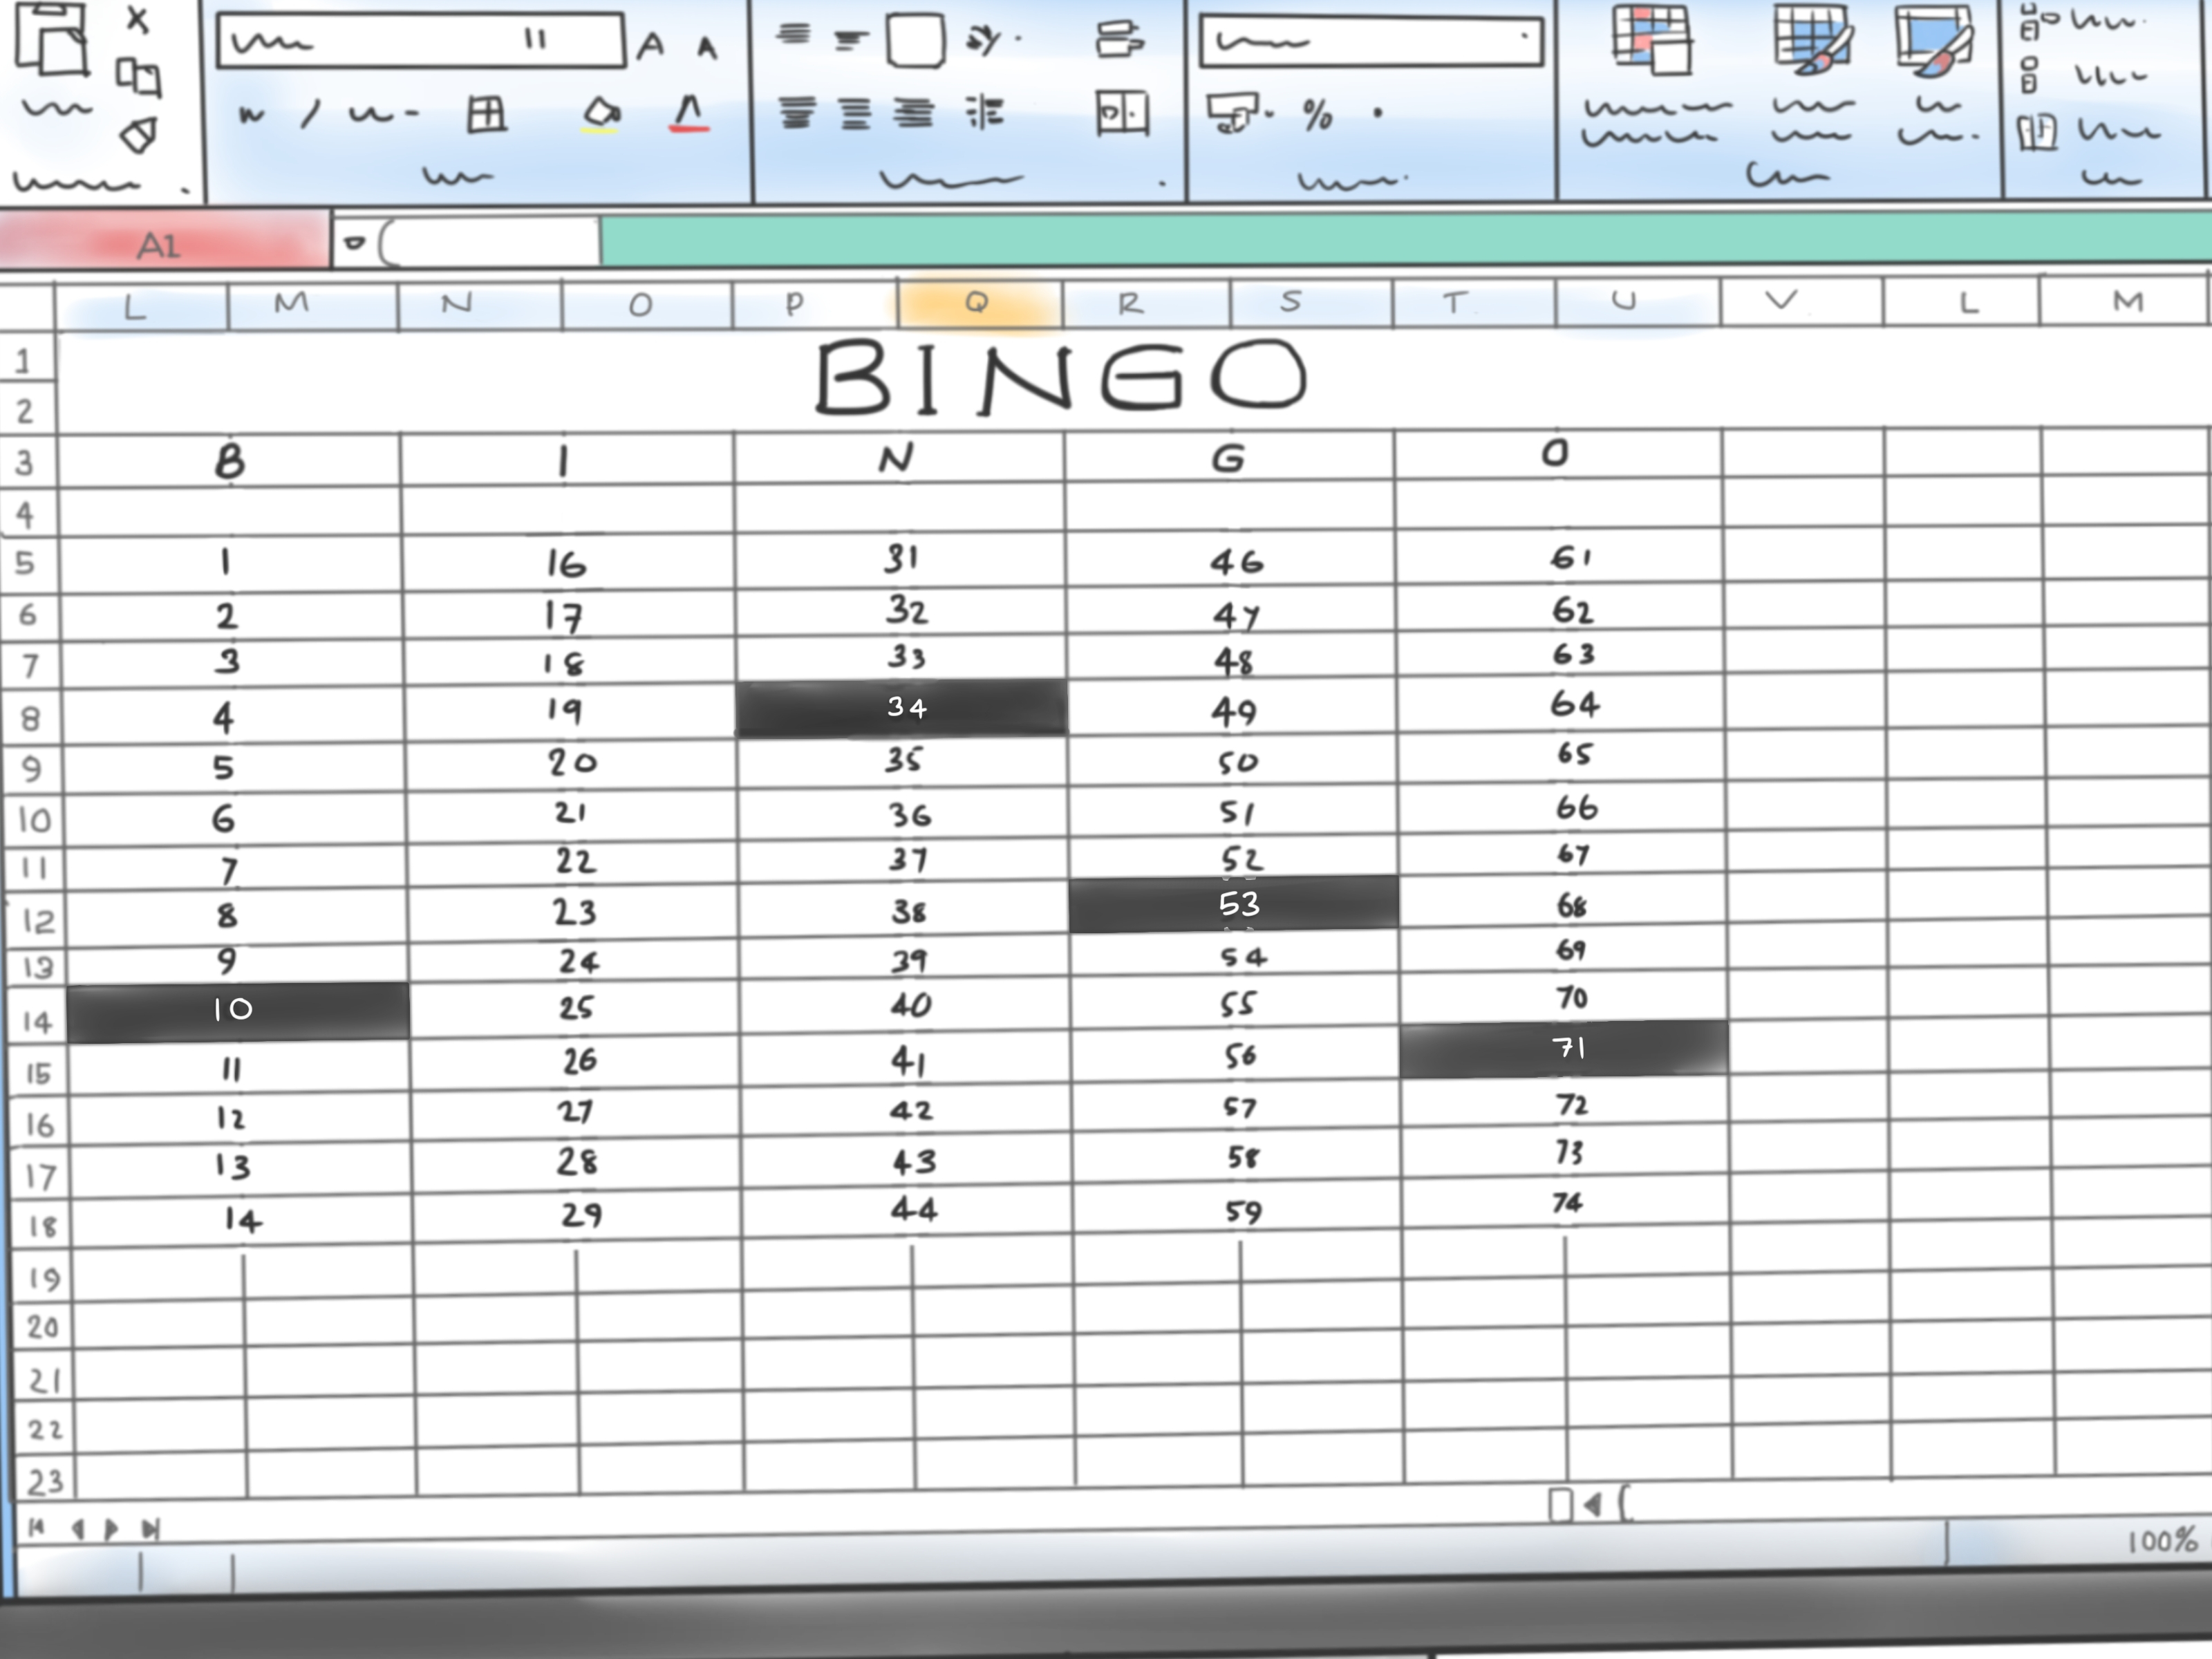 Bingo Spreadsheet Inside How To Make A Bingo Game In Microsoft Office Excel 2007: 9 Steps